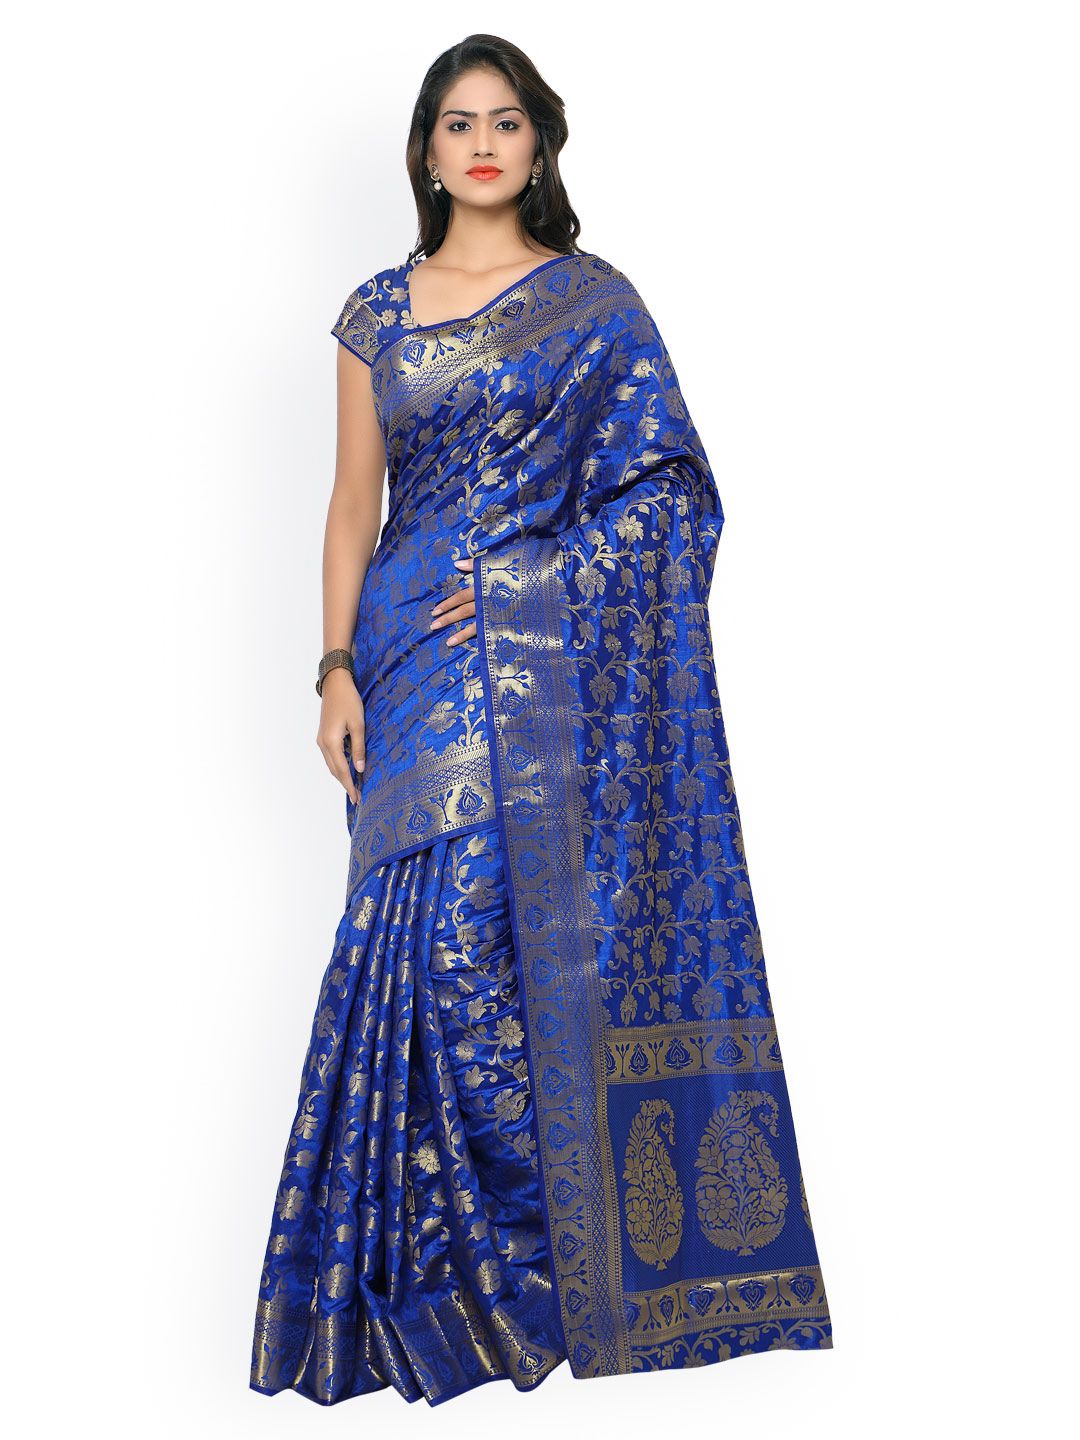 Varkala Silk Sarees Blue Kanjeevaram Tussar Silk Traditional Saree Price in India